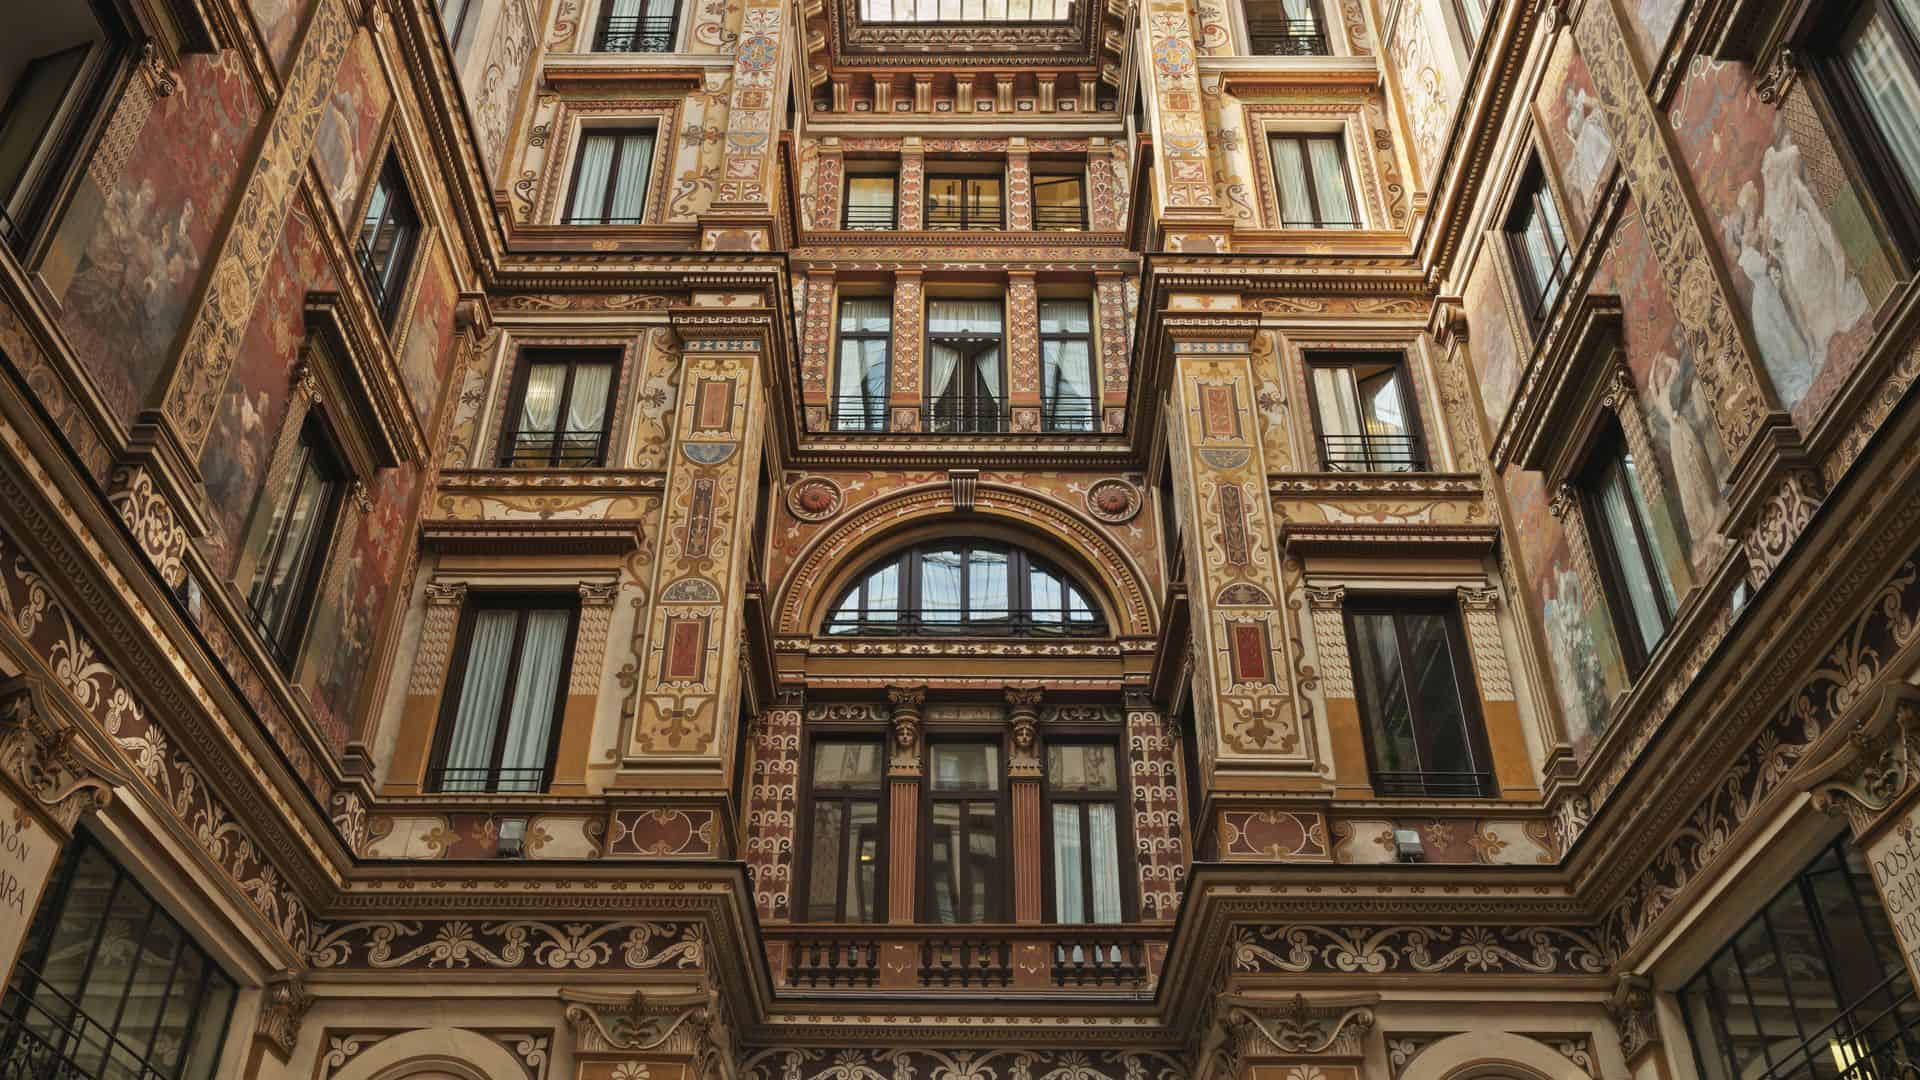 The Art Nouveau courtyard known as the Galleria Sciarra.